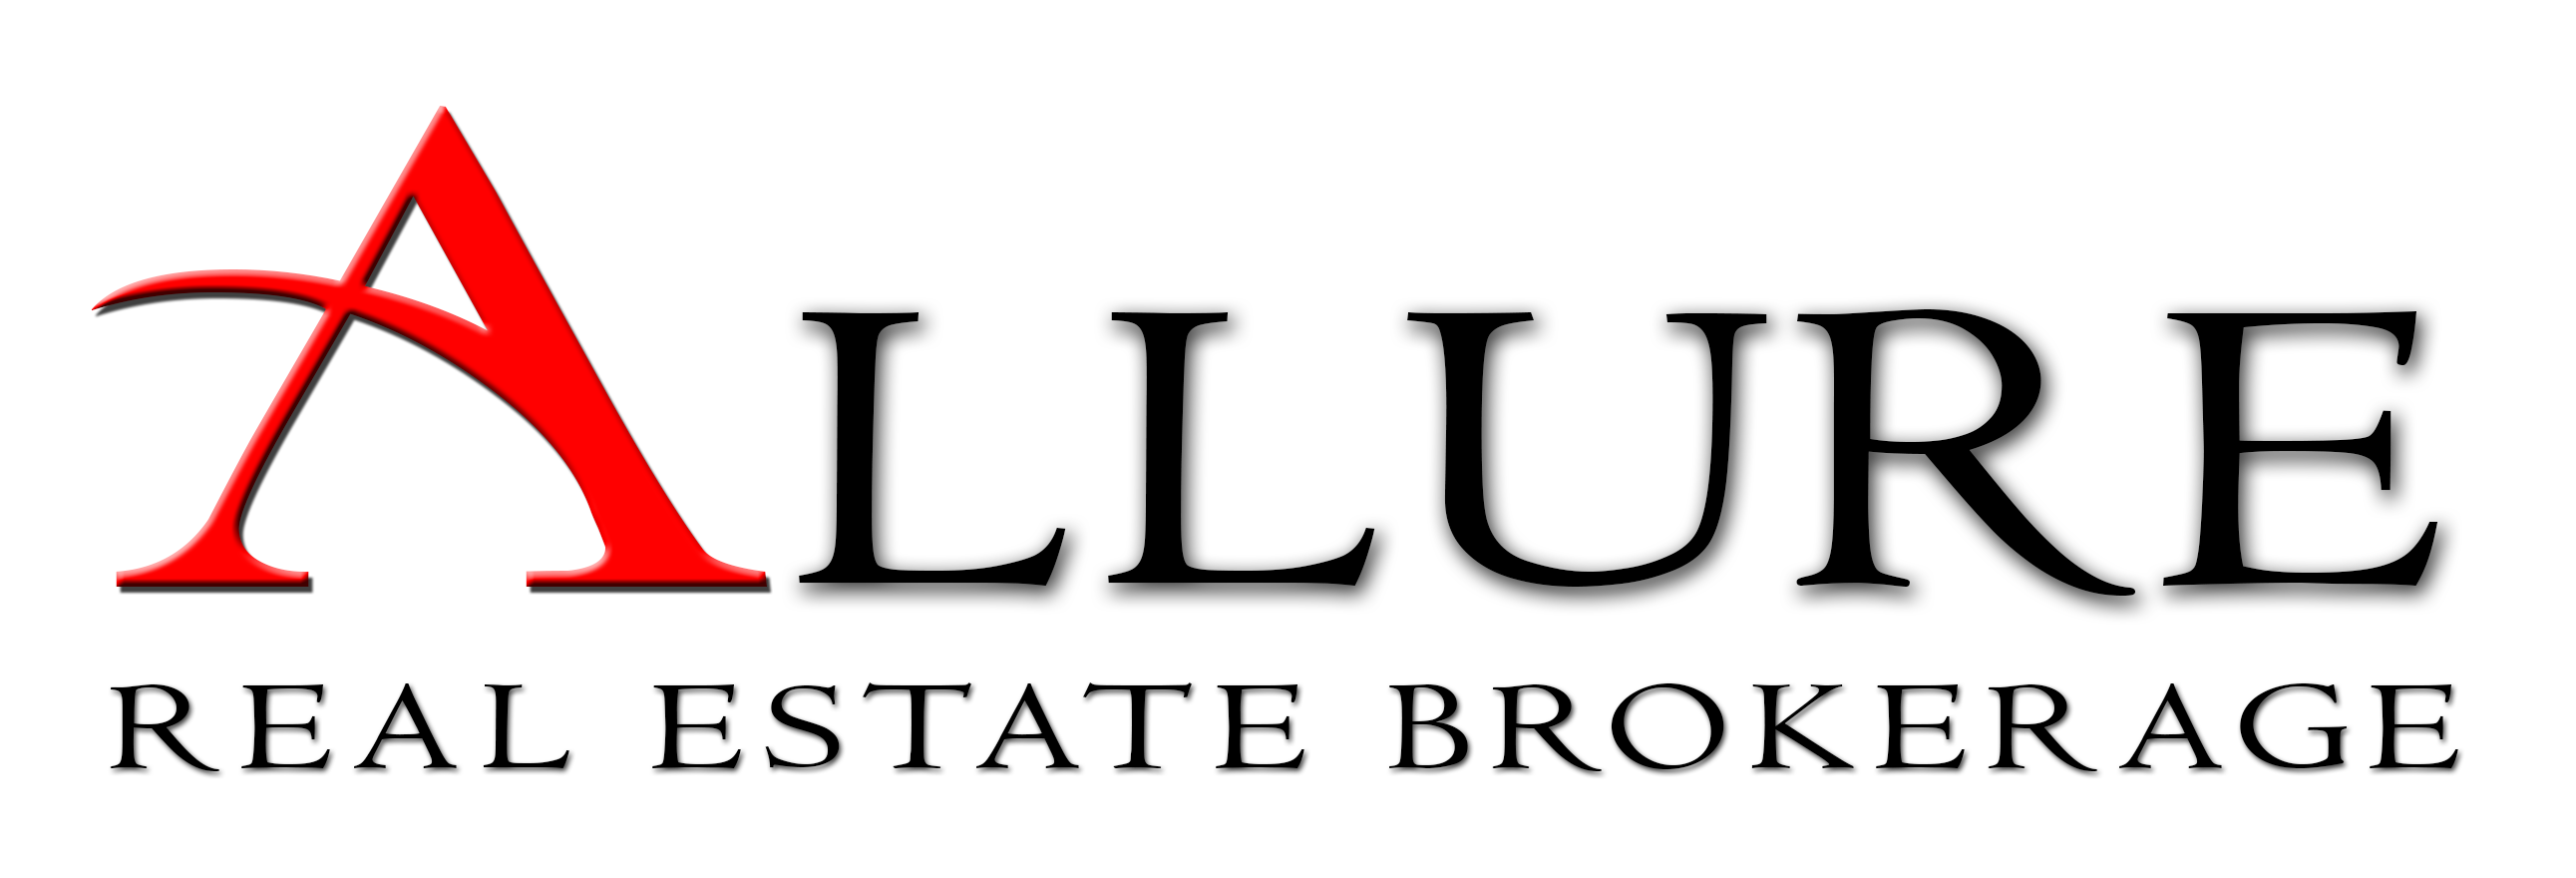 Allure Real Estate Brokerage